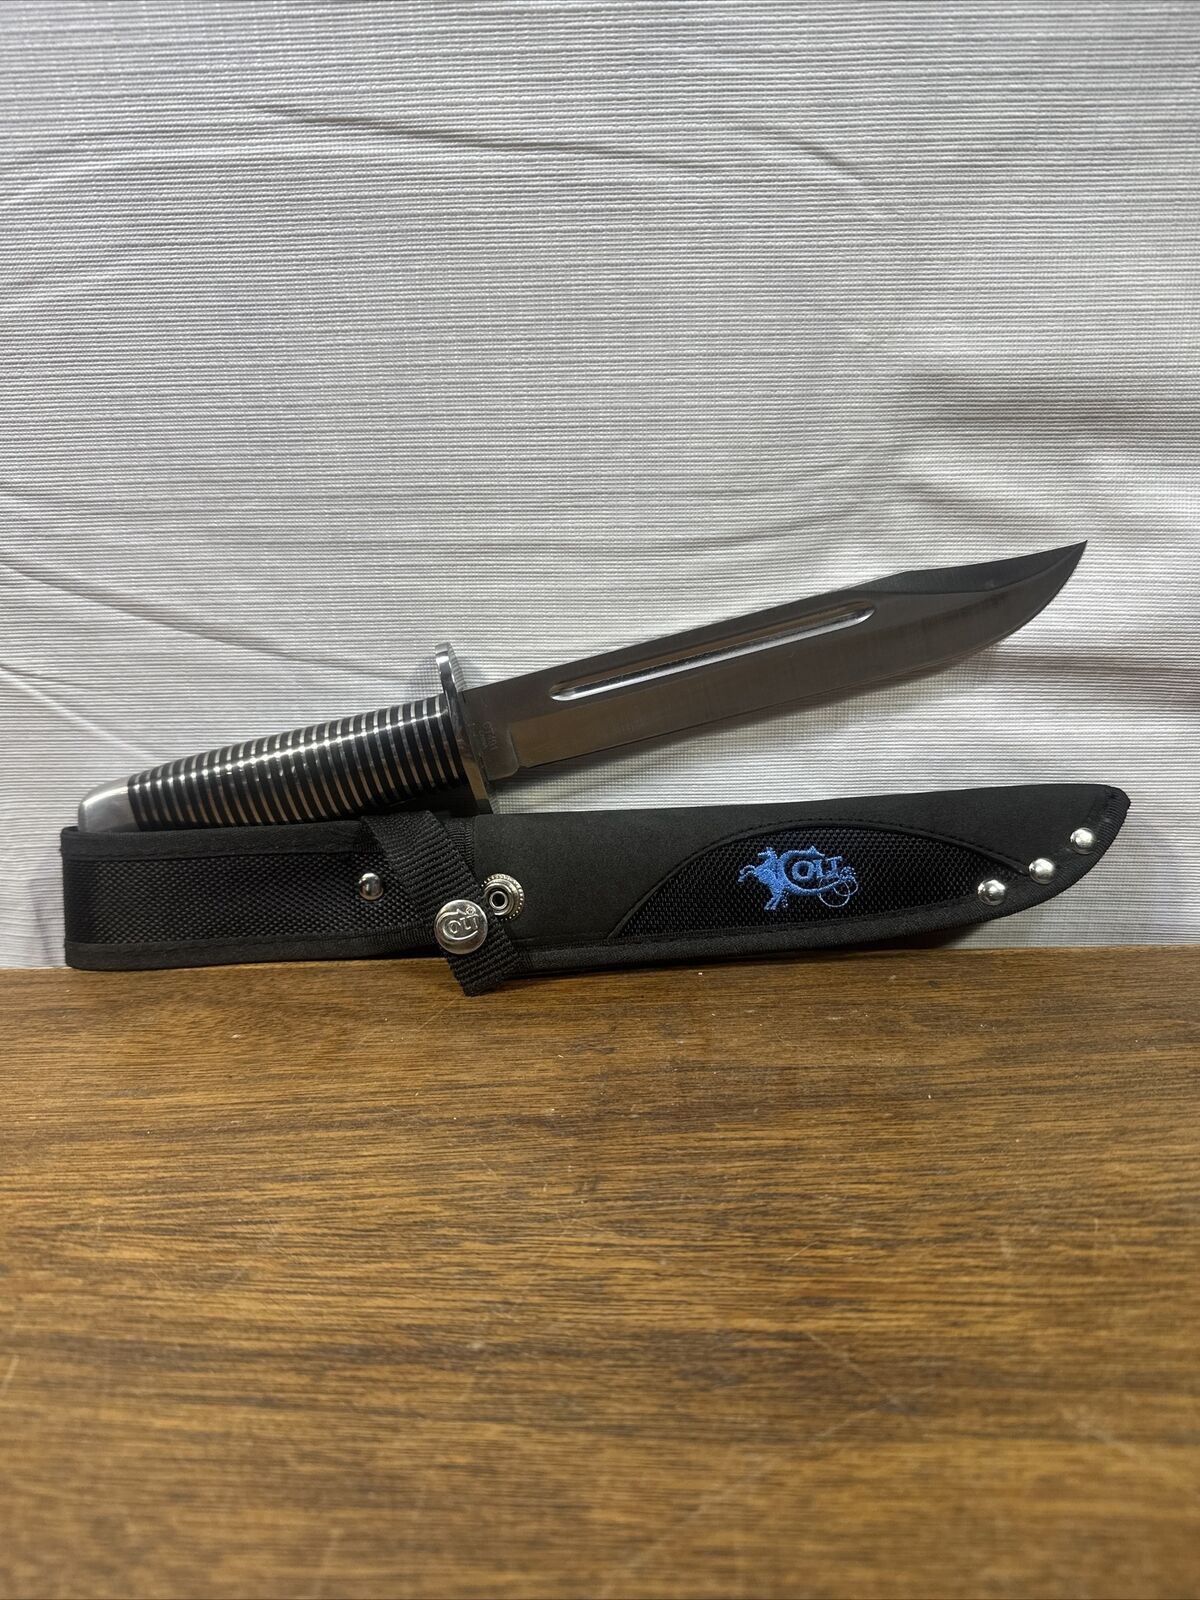 Colt CT 491 Black Beauty Military Fixed Blade Custom File work Knife & Sheath